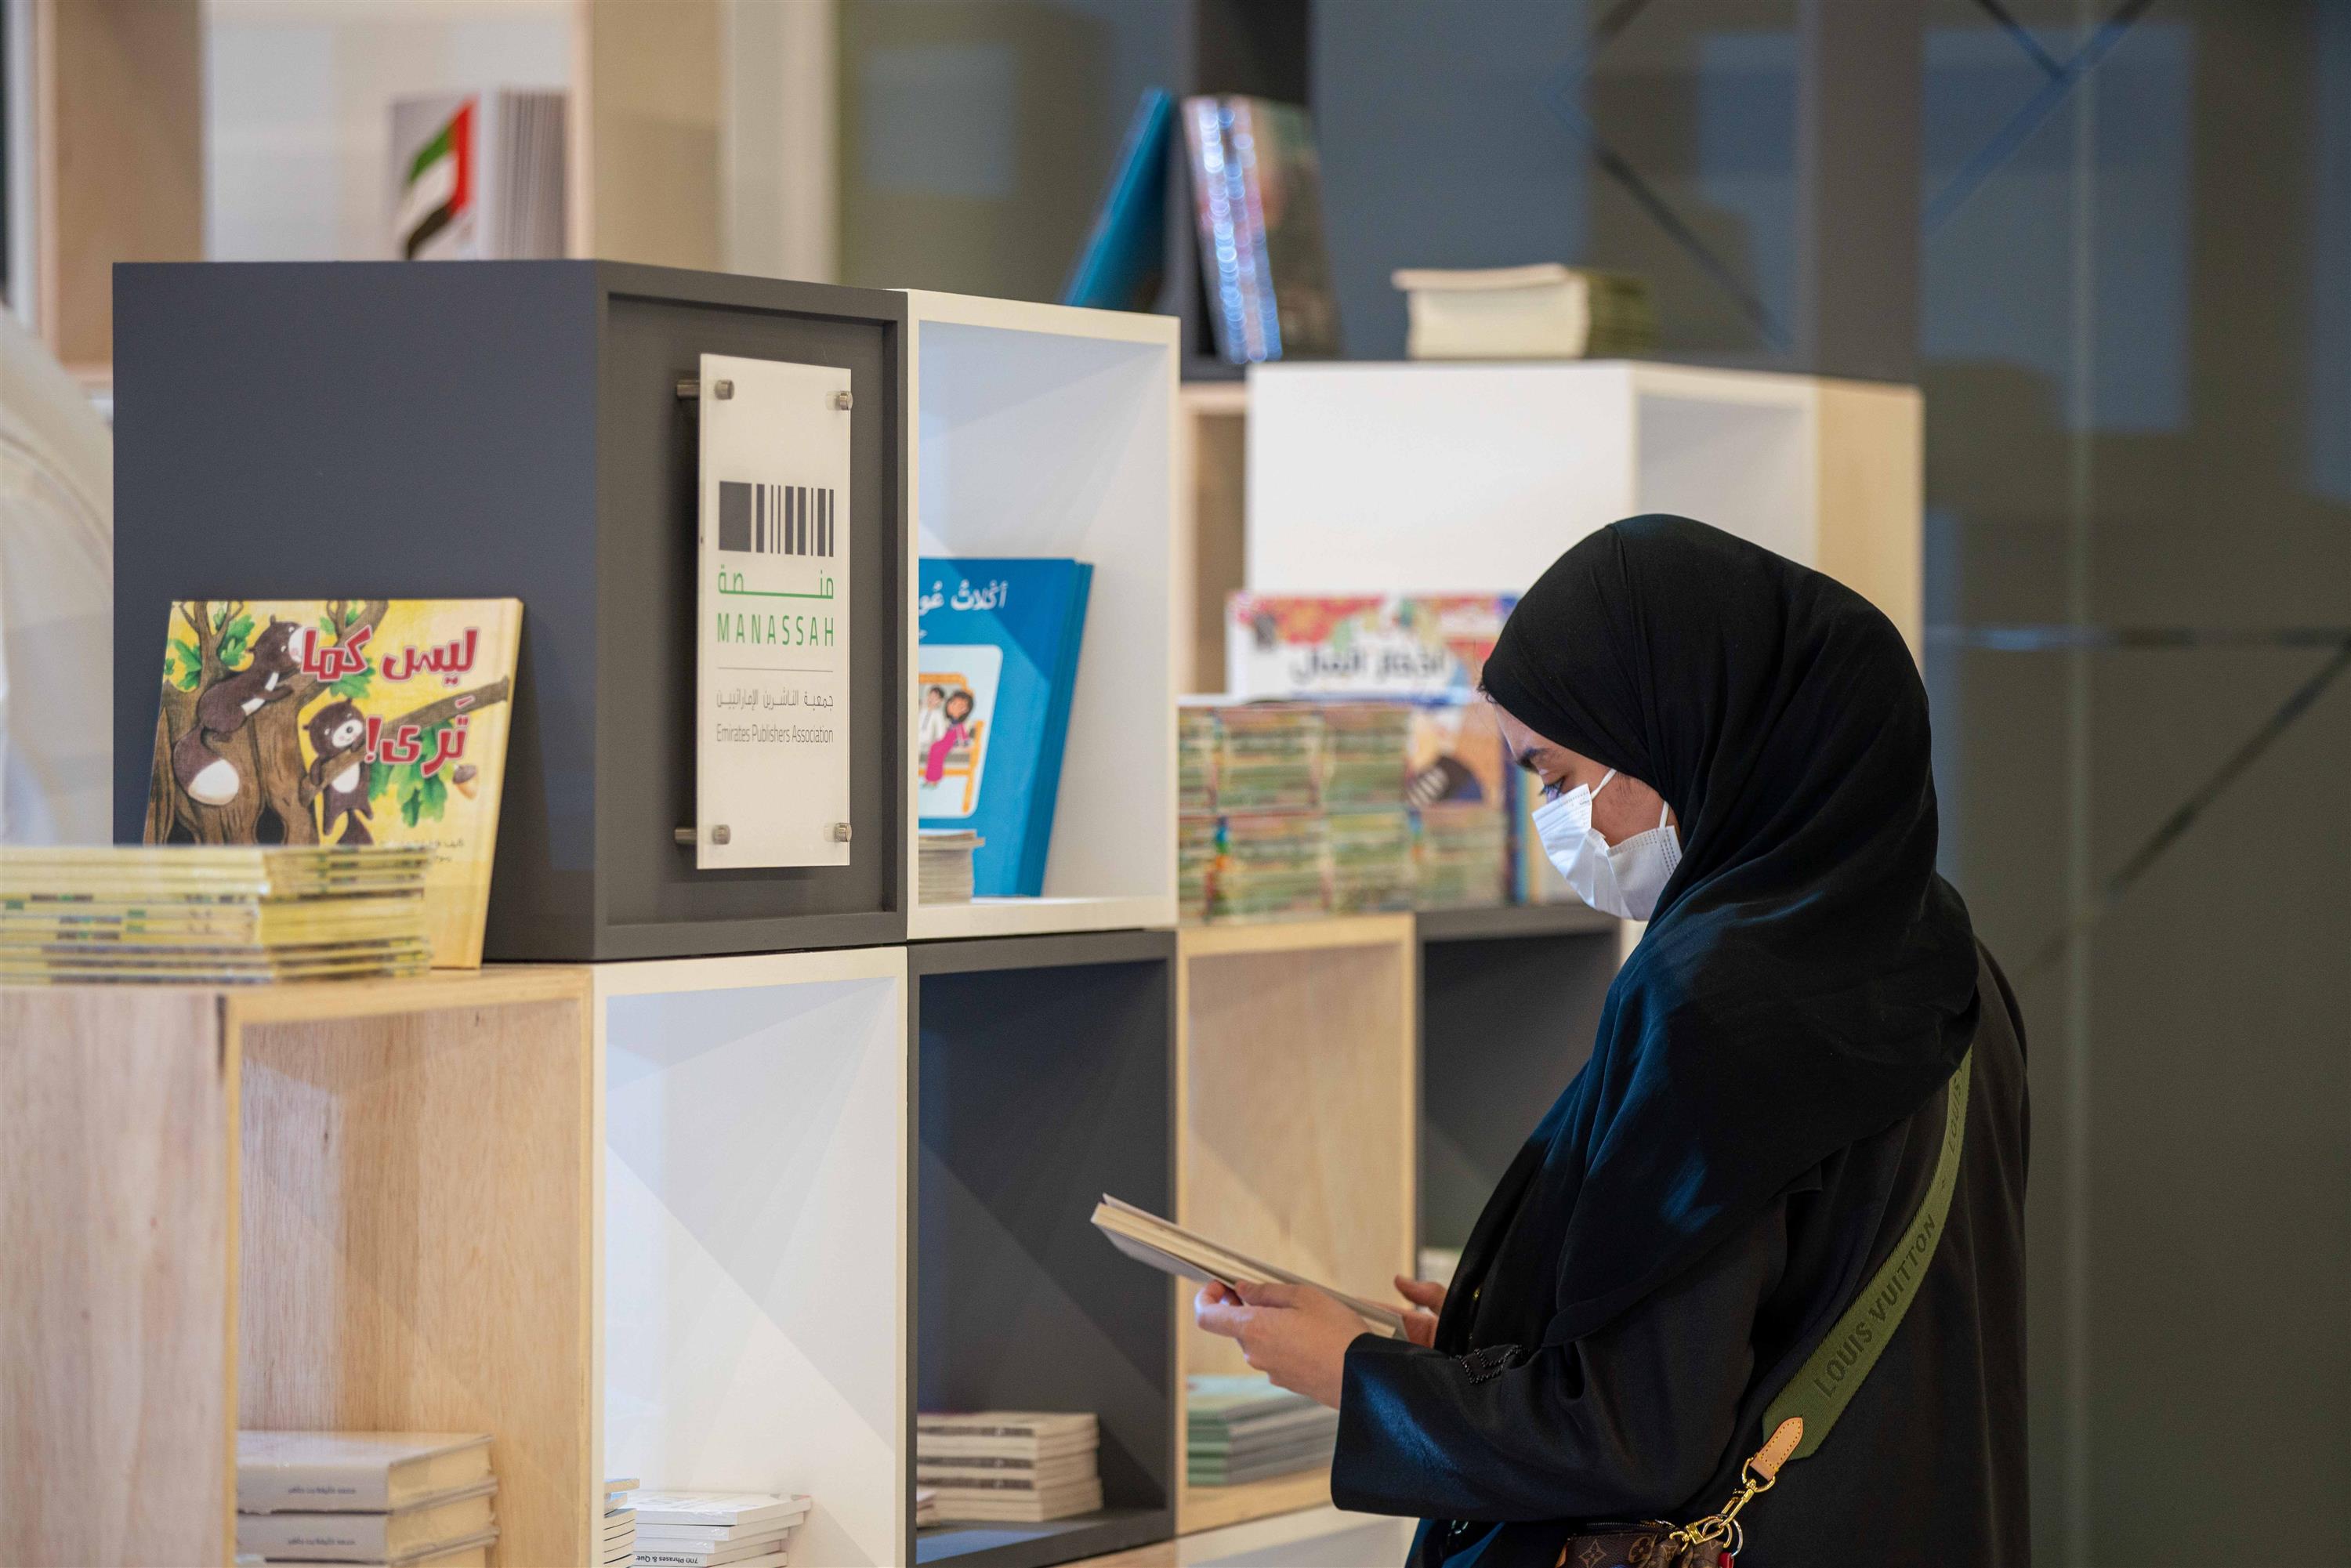 EPA’s Manassah platform represents 17 local publishers at Emirati Book Fair 2022